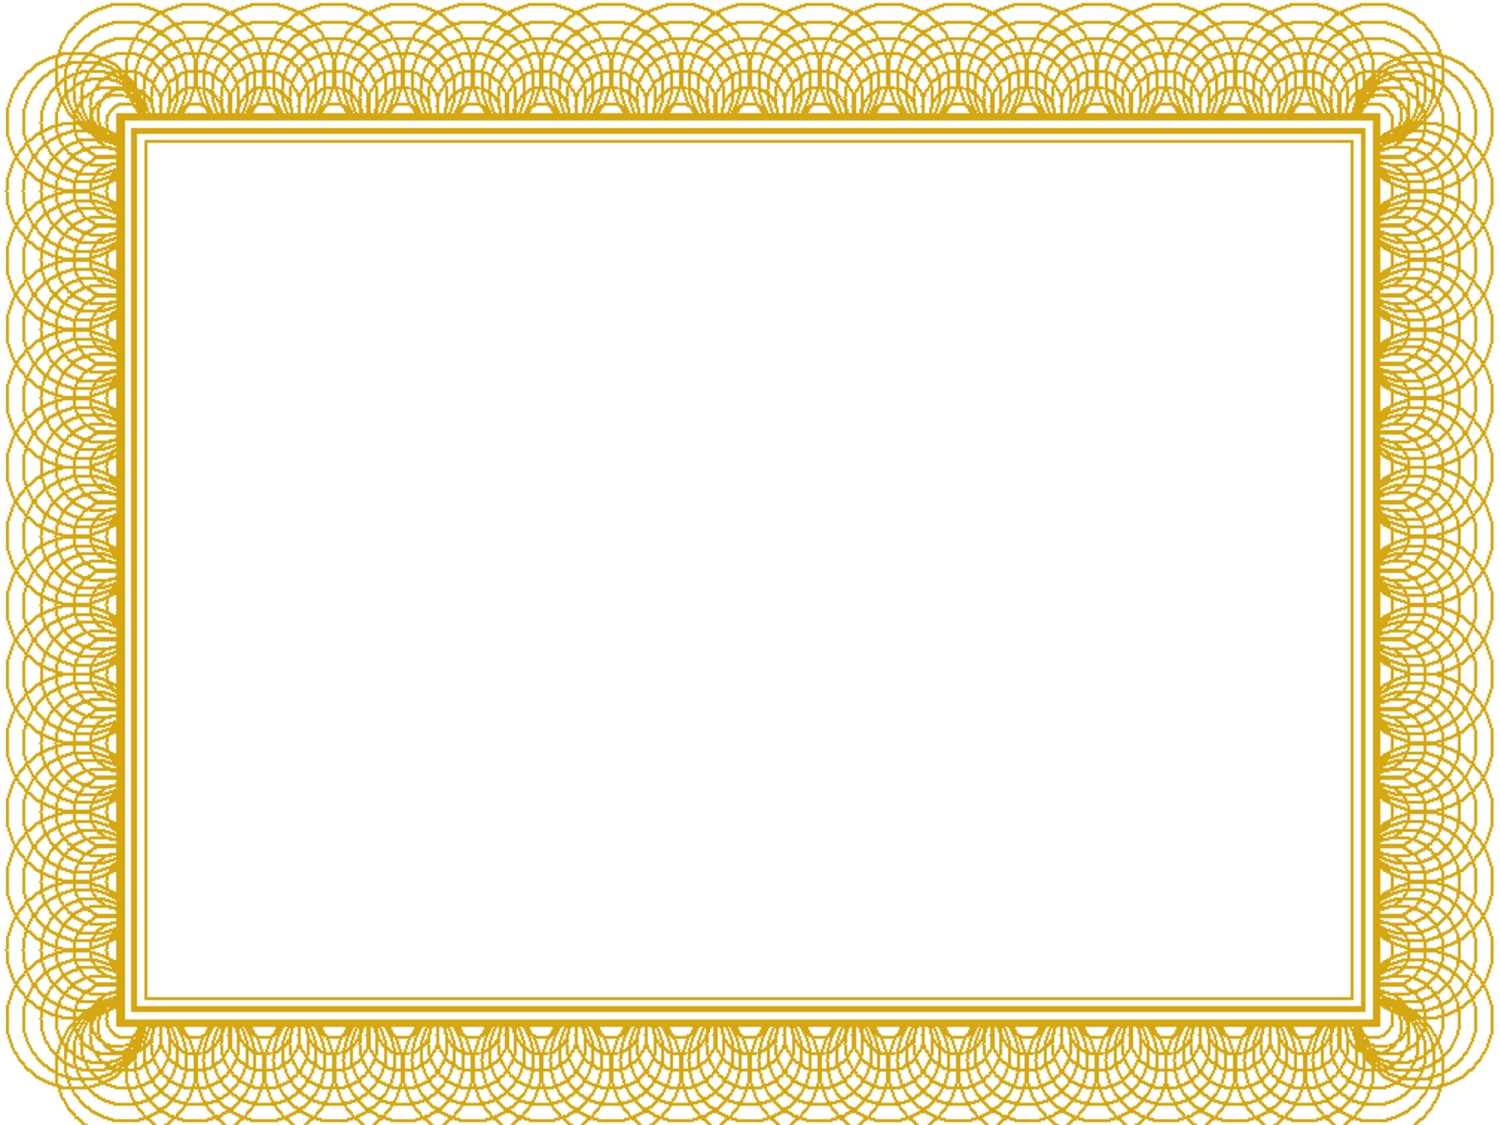 Award Certificate Border Template Pertaining To Gold With Award Certificate Border Template